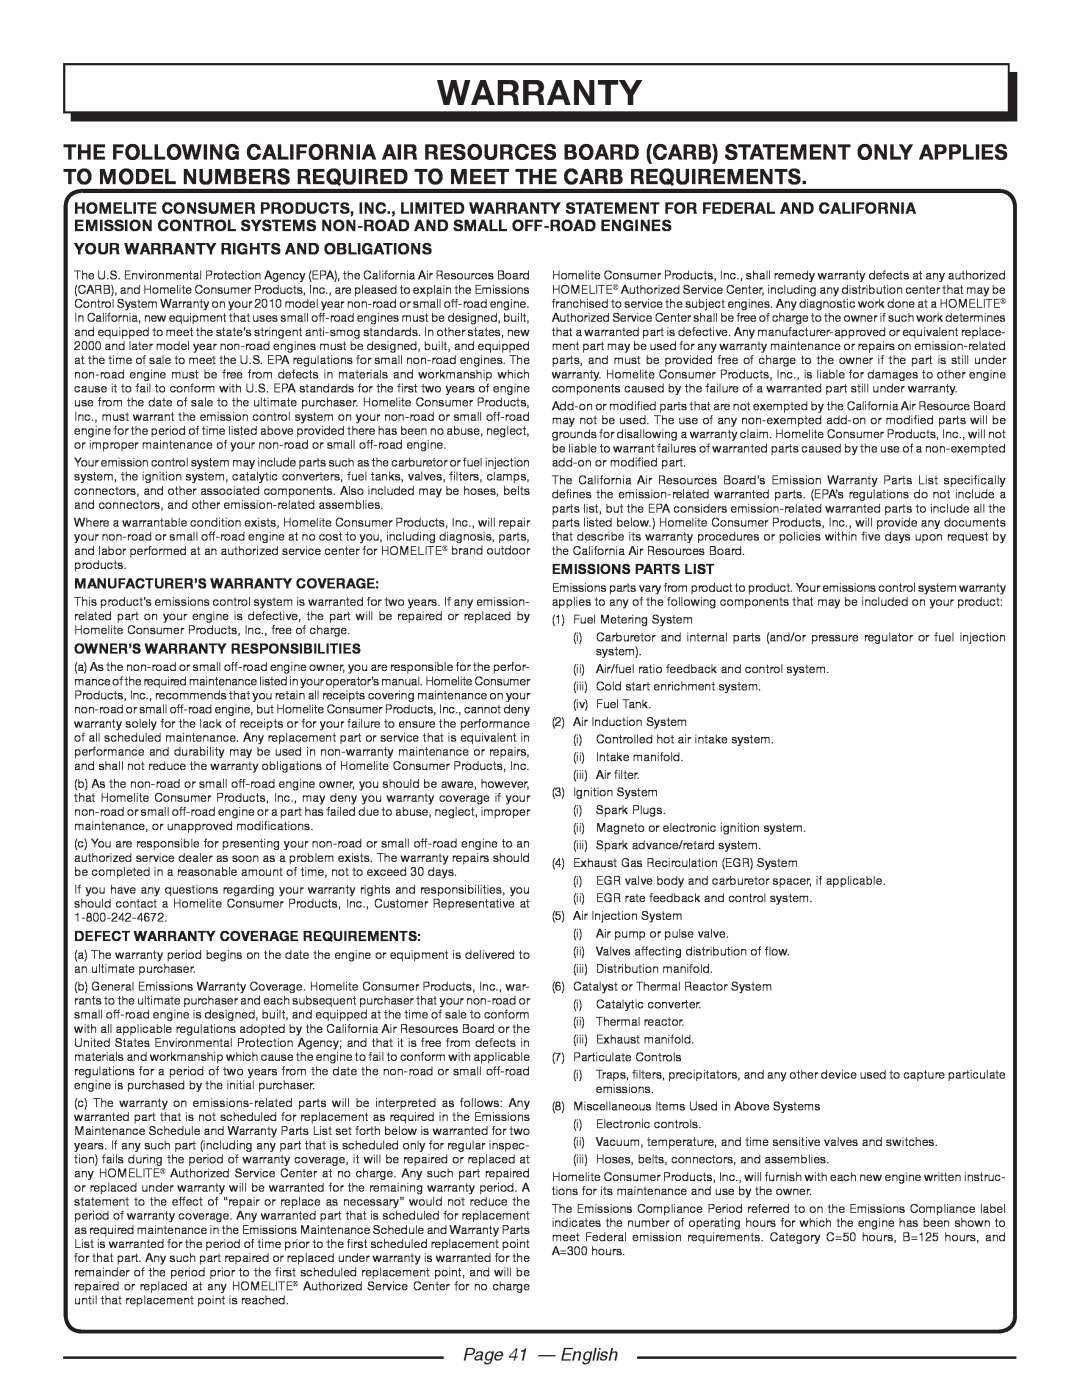 Homelite UT10542, UT10918 Page 41 - English, Manufacturer’S Warranty Coverage, Owner’S Warranty Responsibilities 